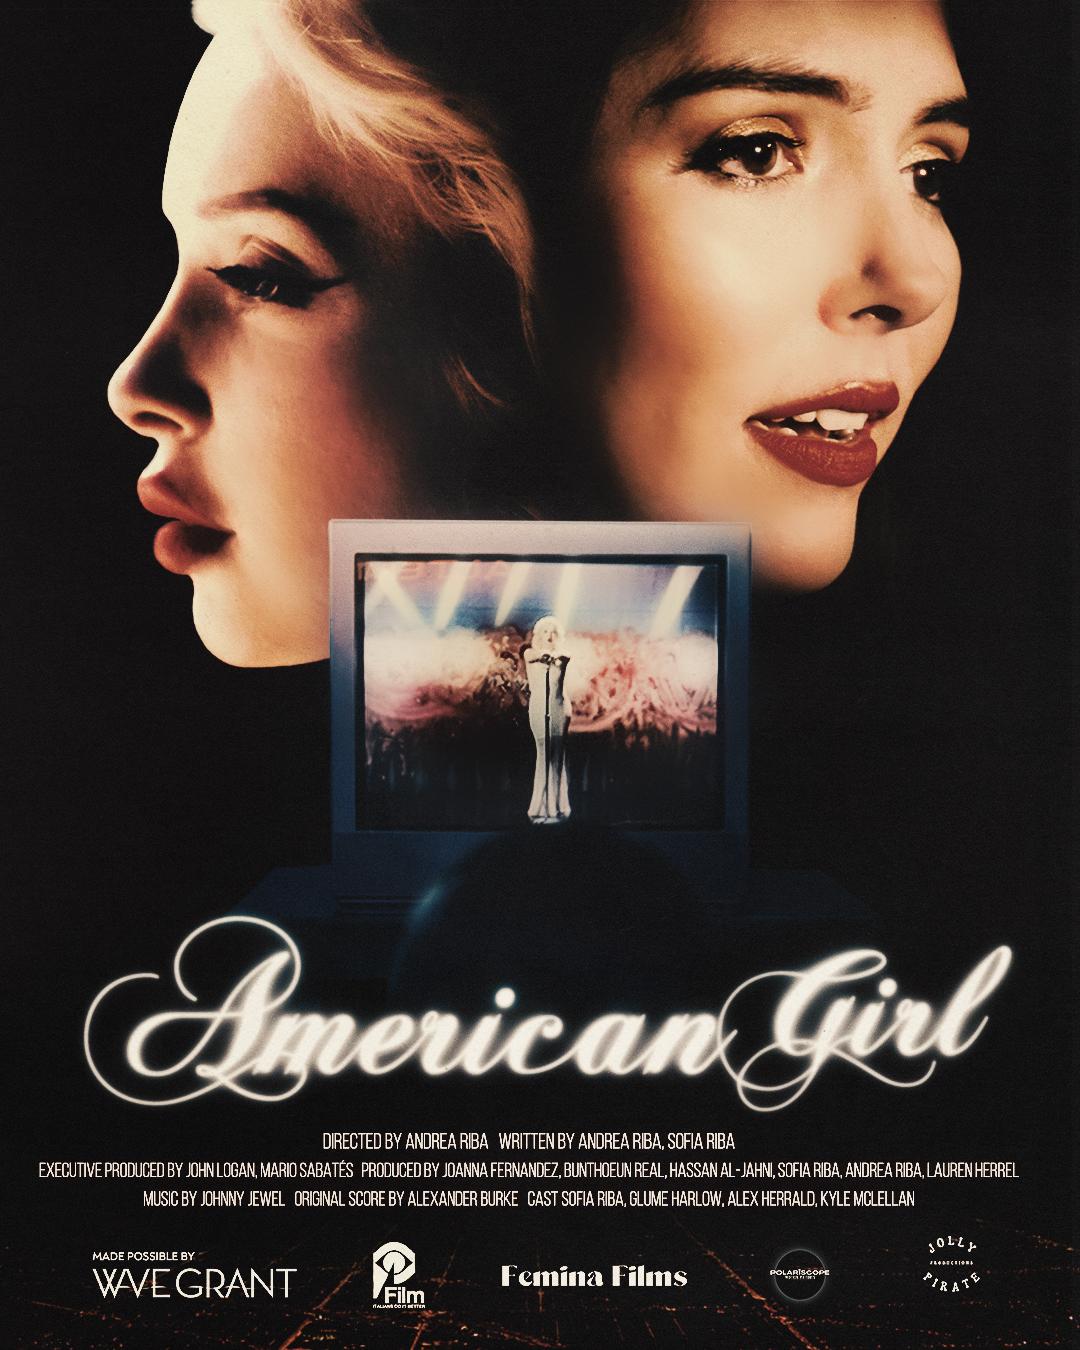 bruce hannibal add american girl movie online photo